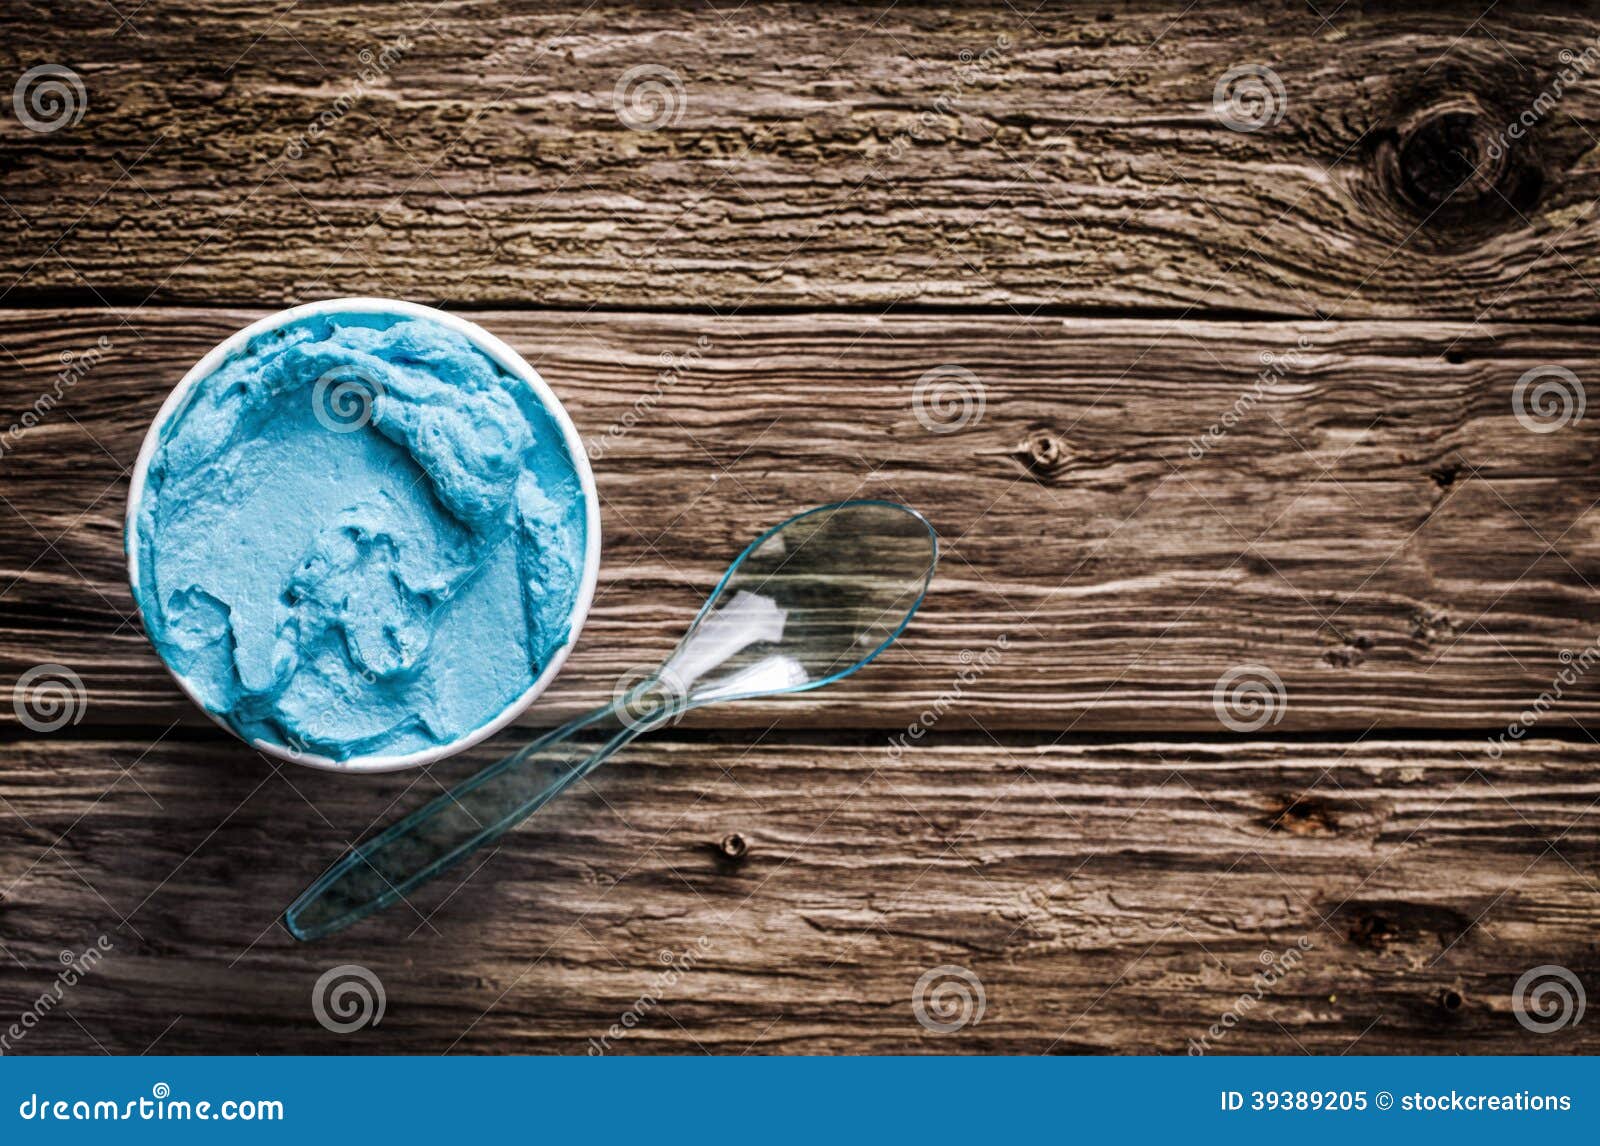 cool refreshing blue italian ice cream in a tub